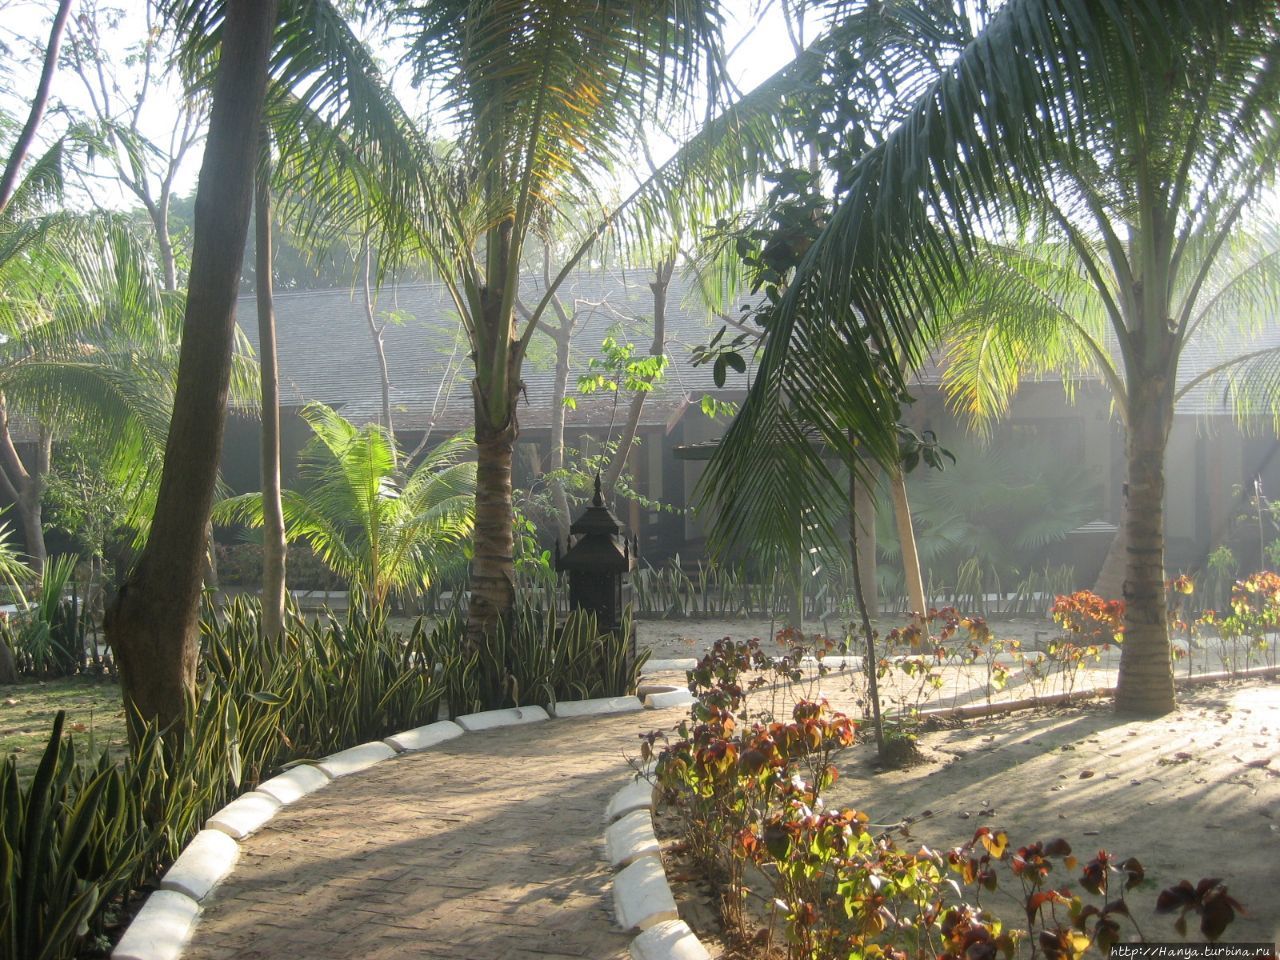 Территория отеля  “Thazin Garden Hotel” в Багане Баган, Мьянма